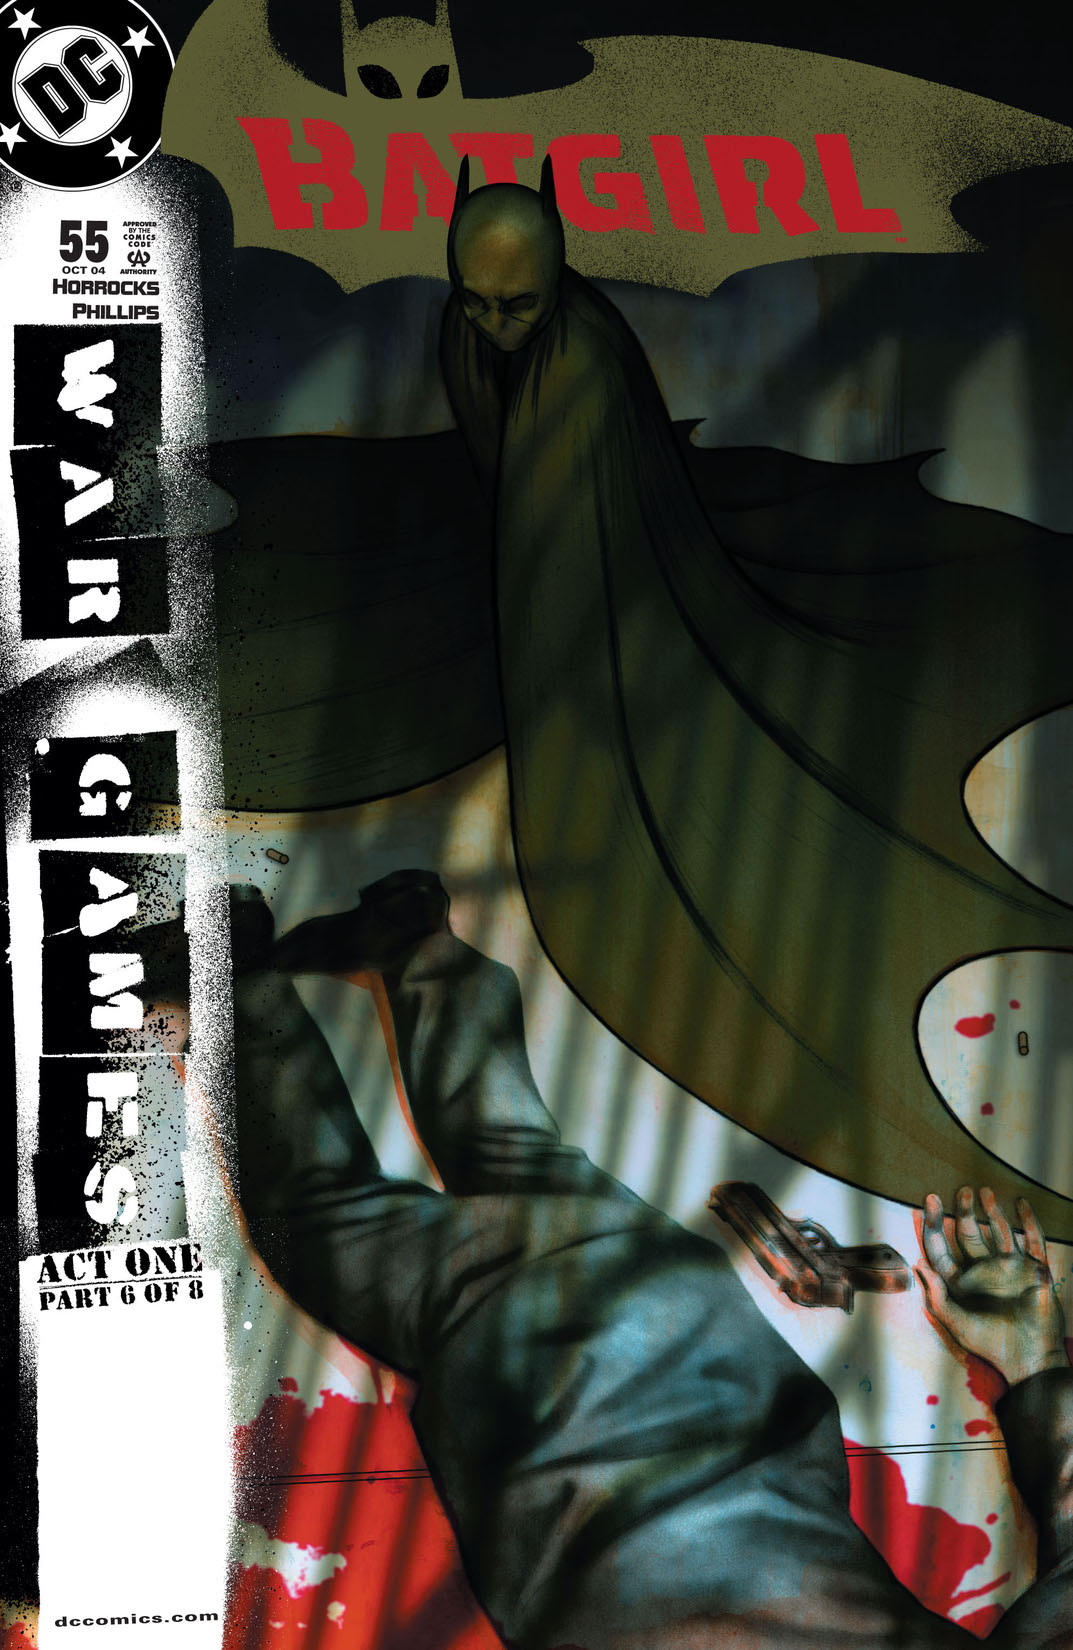 Batgirl (2000-) #55 preview images